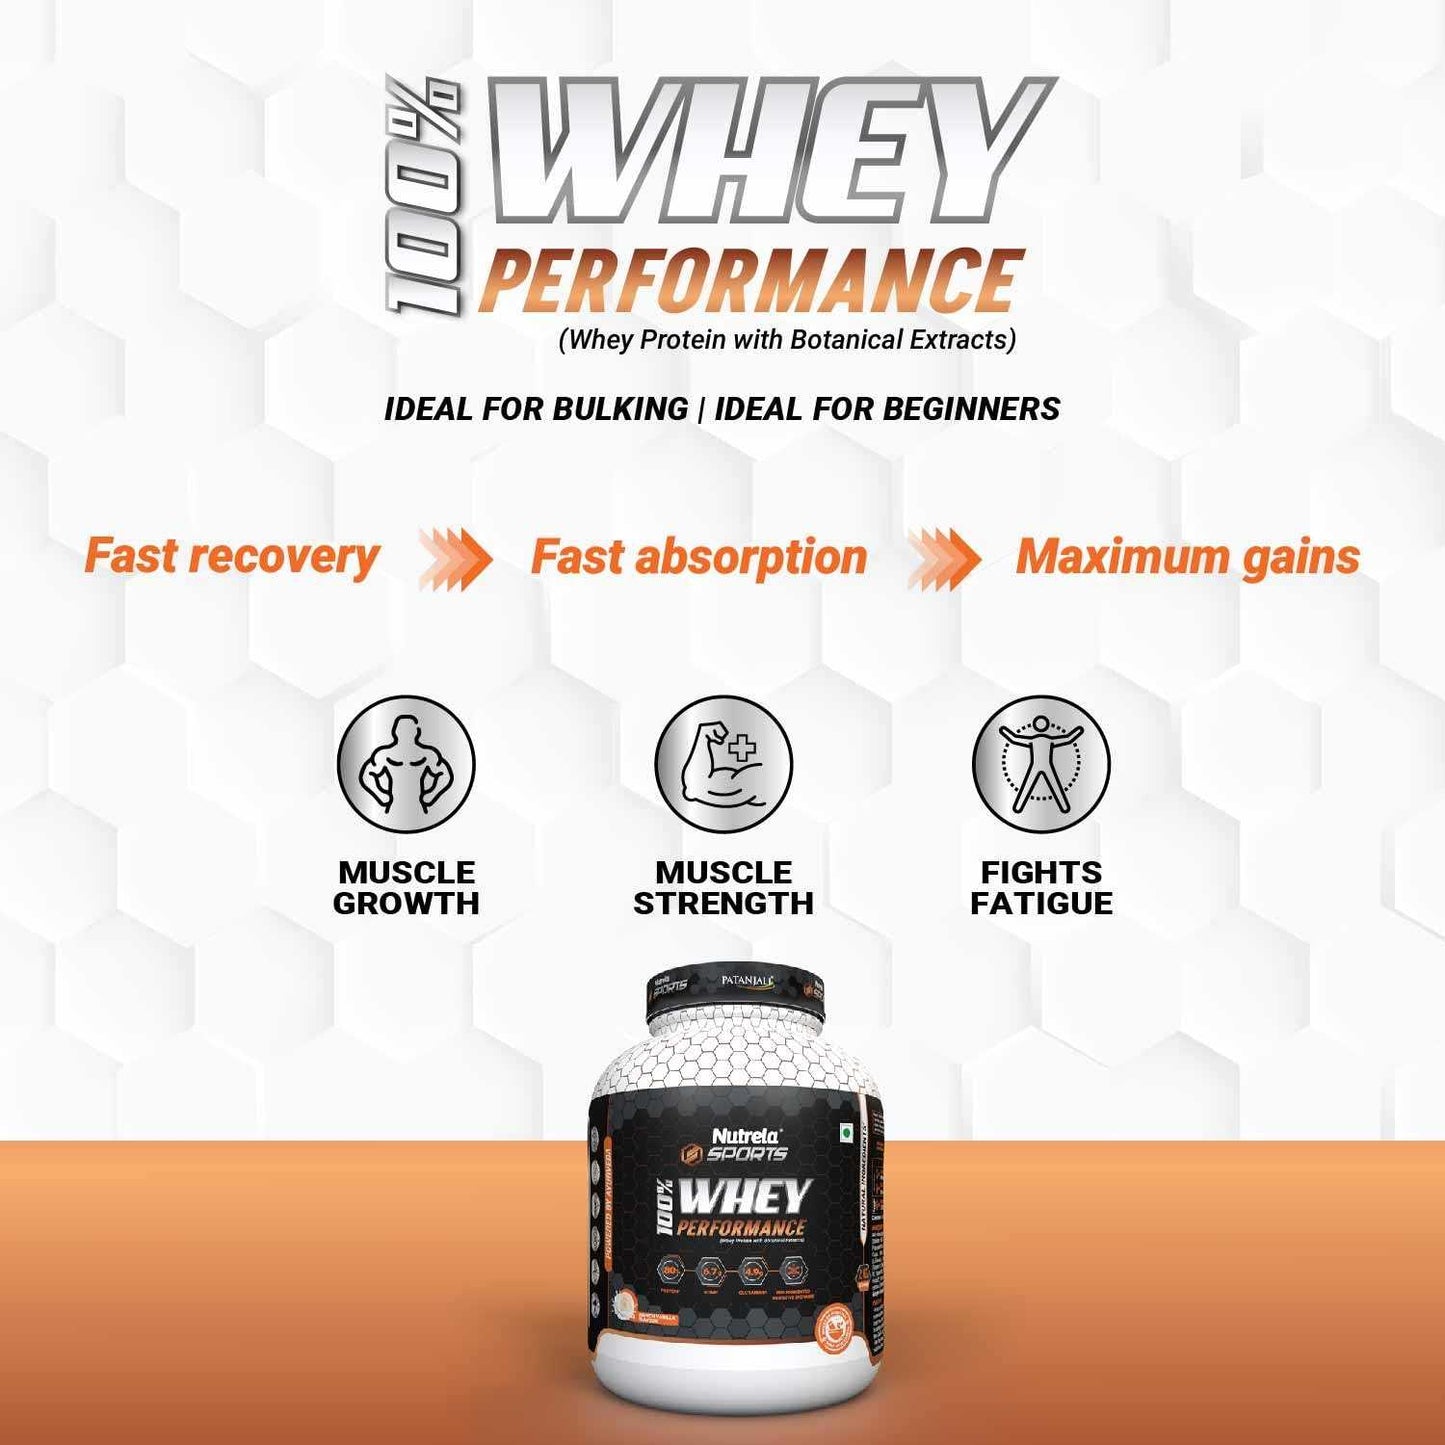 Patanjali 100% Whey Performance 2kg Uses